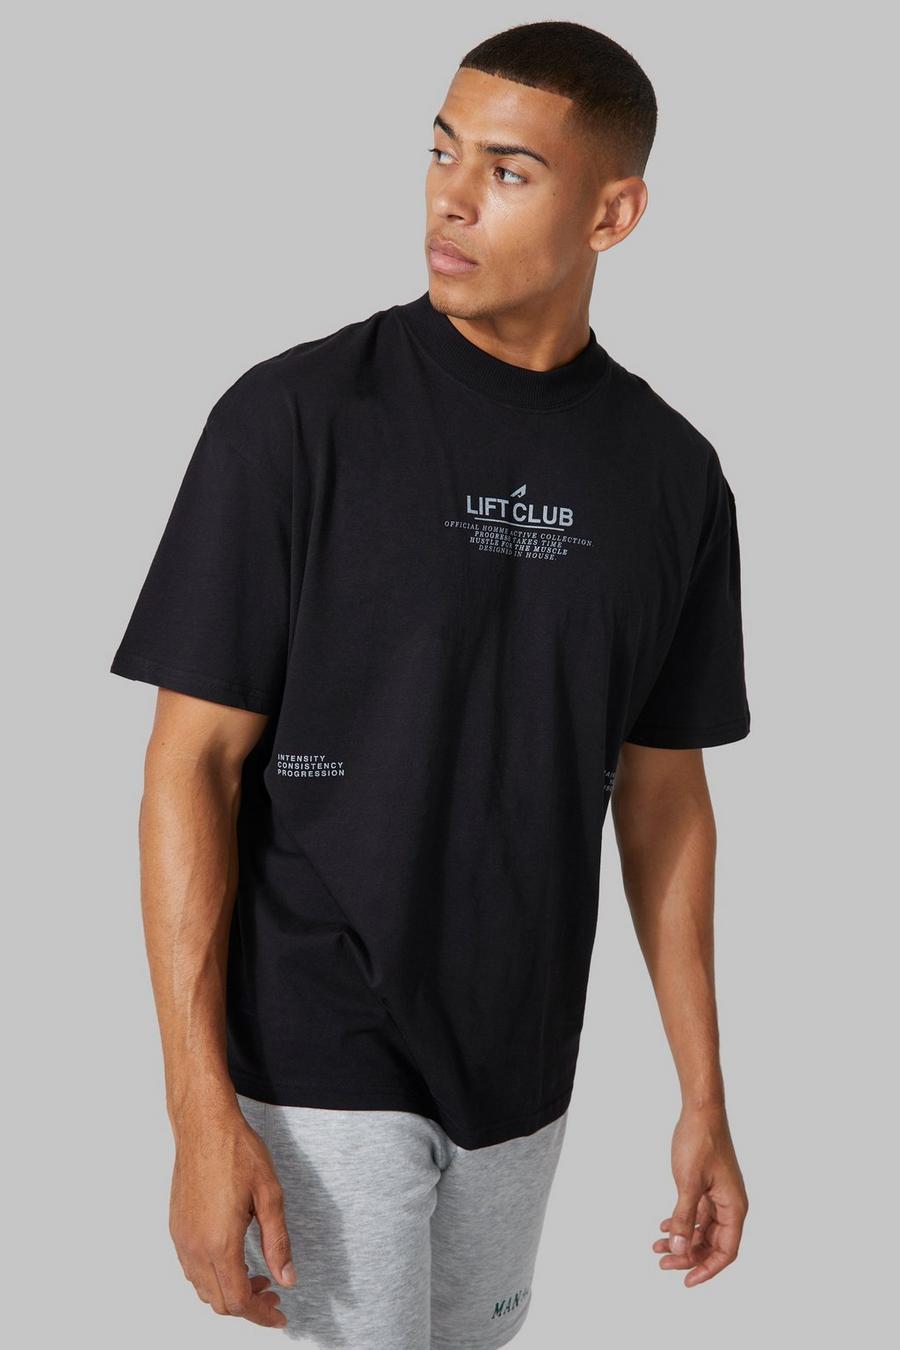 Oversize T-Shirt mit Active Lift Club Text-Print, Black image number 1